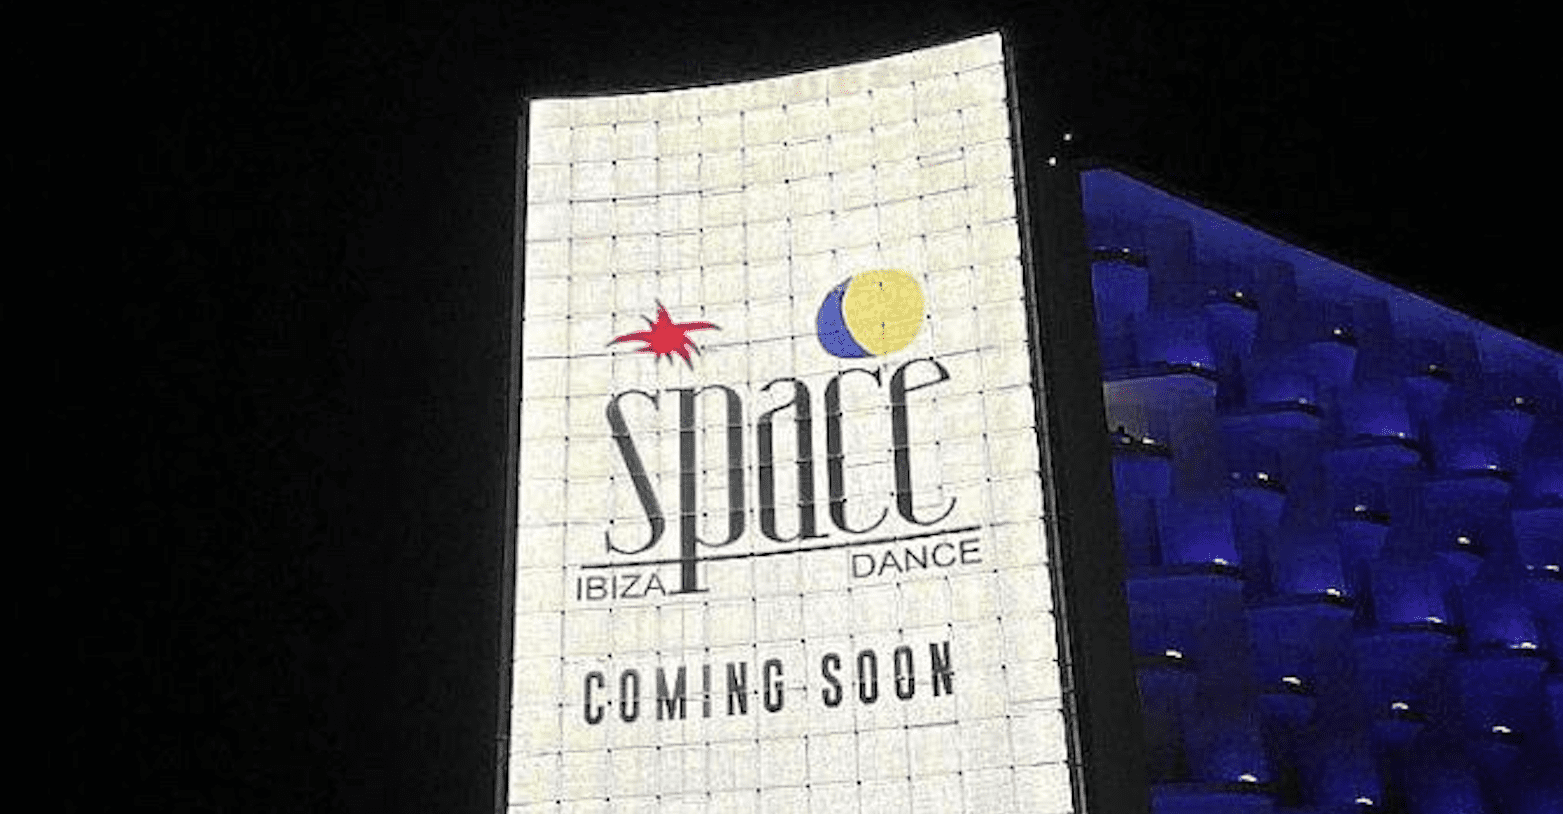 Space billboard